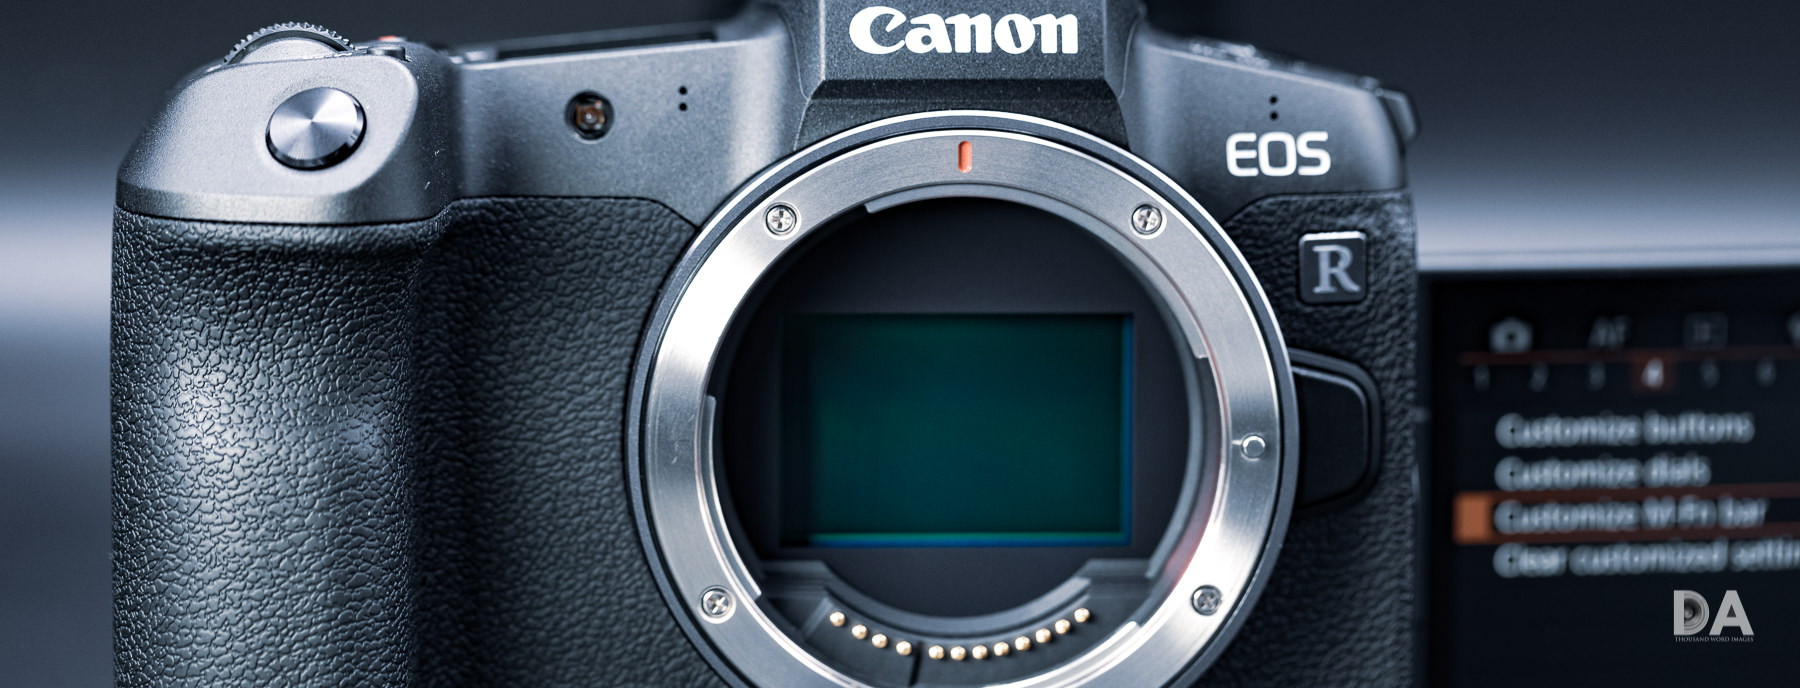 Canon EOS R Review - DustinAbbott.net